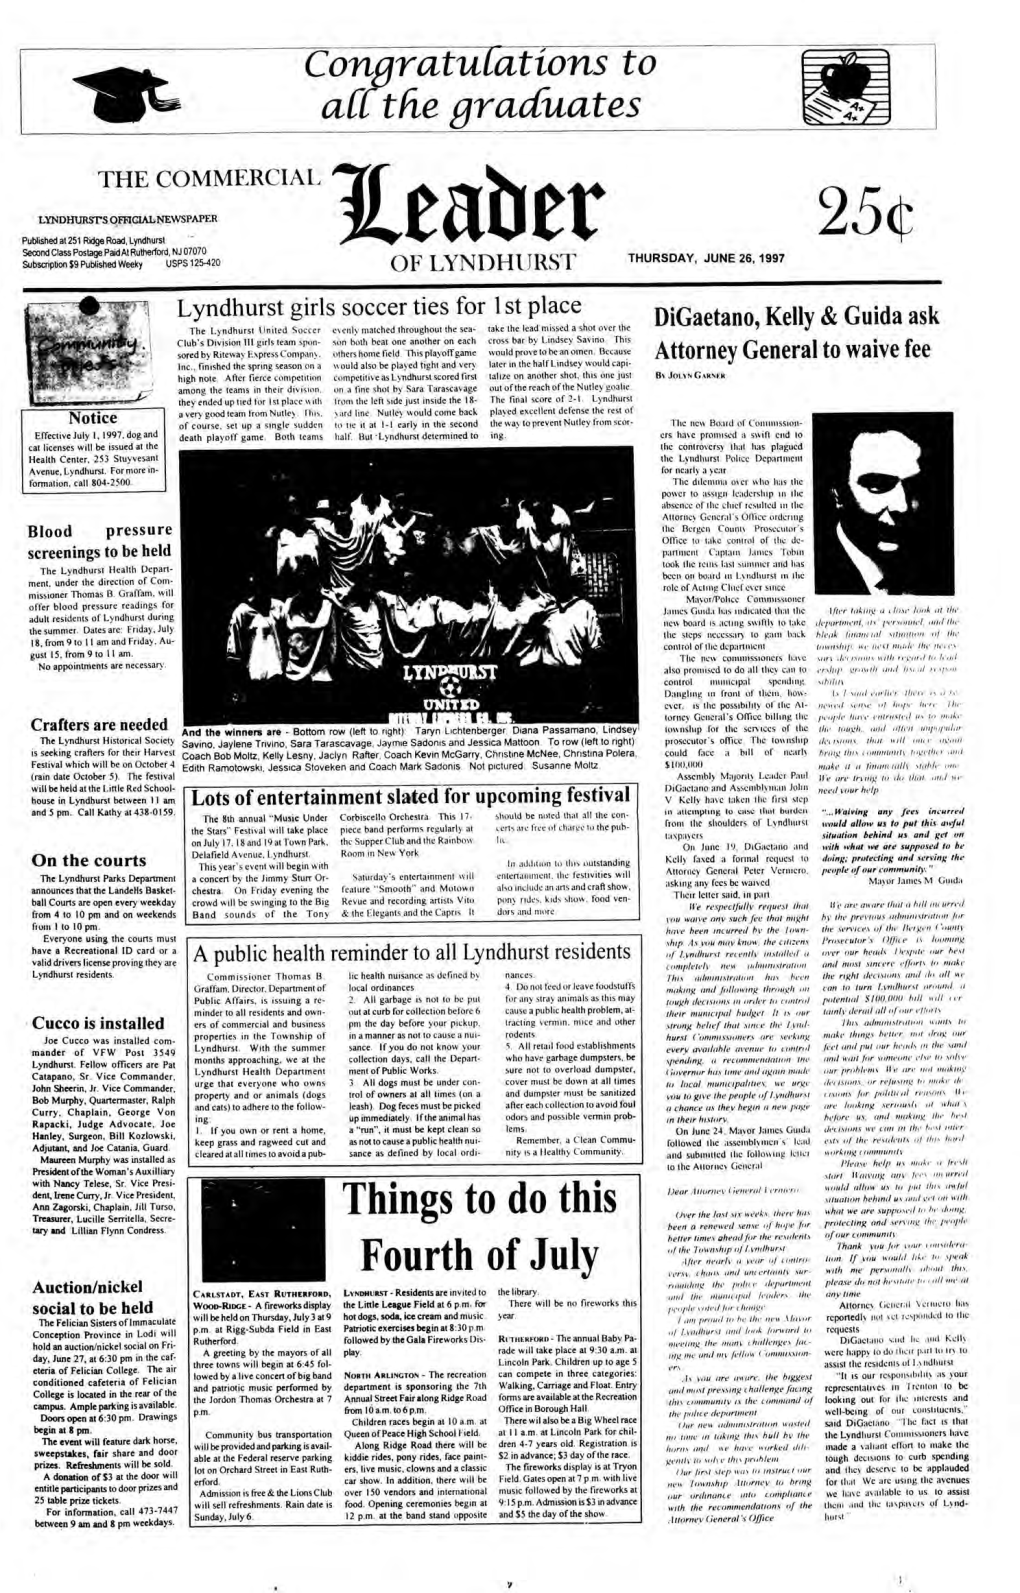 Heaber THURSDAY, JUNE 26, 1997 Subscription $9 Published Weeky USPS125-420 of LYNDHURST